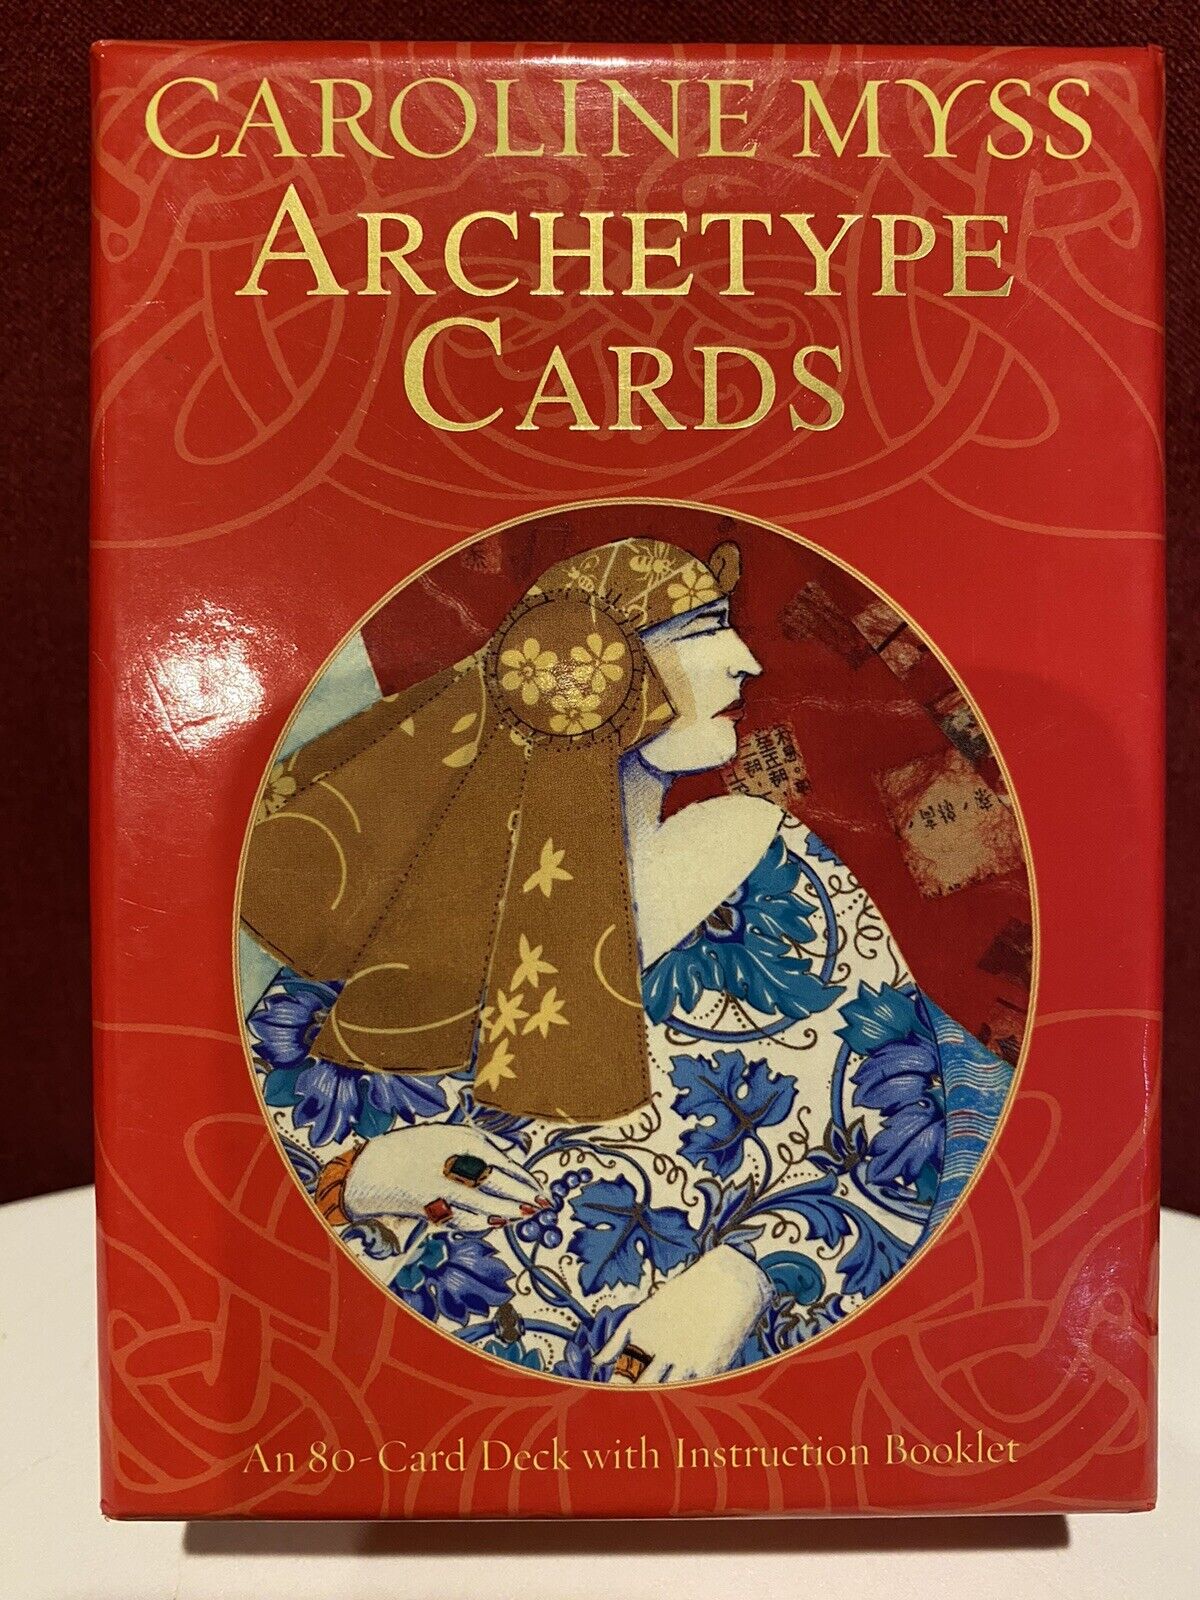 ORIGINAL 2003 ARCHETYPE ORACLE TAROT 80 CARD DECK + BOOKLET CAROLINE MYSS EXC